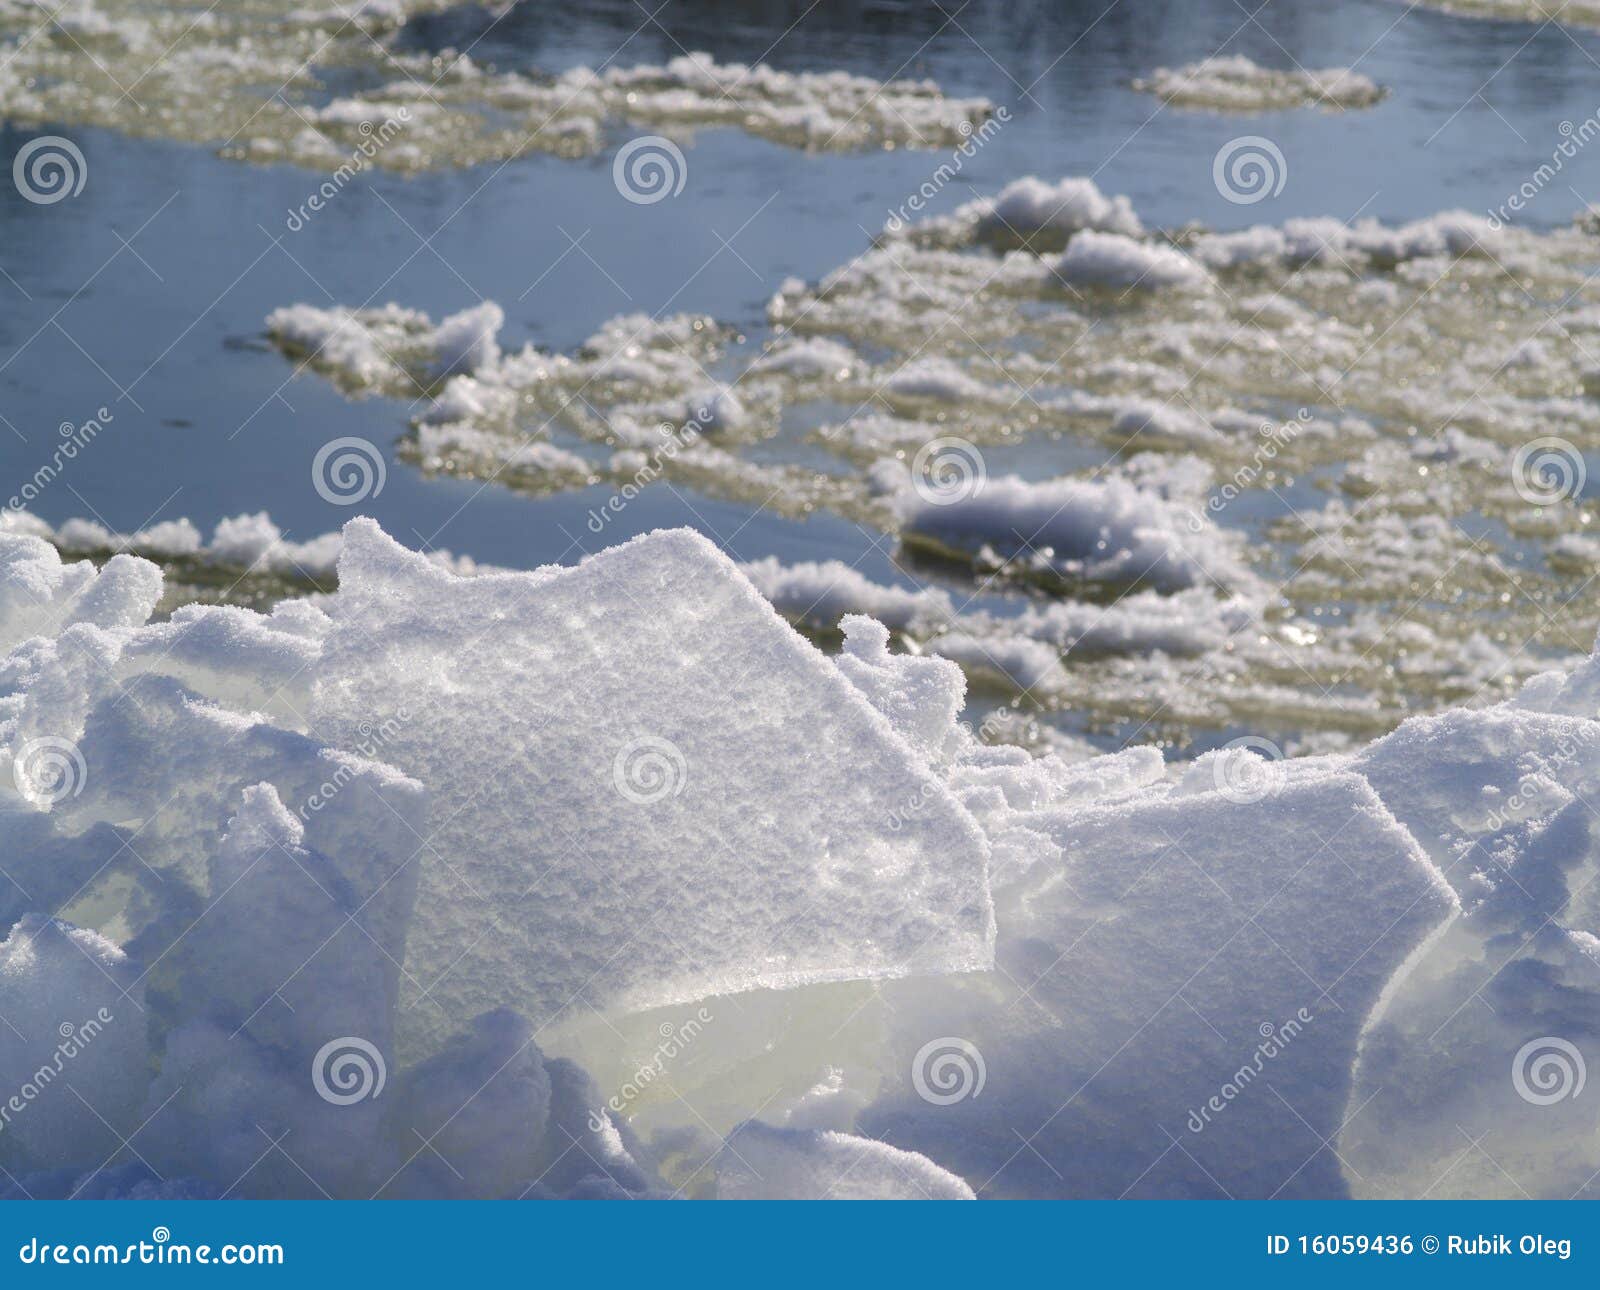 Кусочки льда на реке. Тает лед на реке. Куски растаявшего льда на реке. Растаявший кусок льда. Куски льда речка.